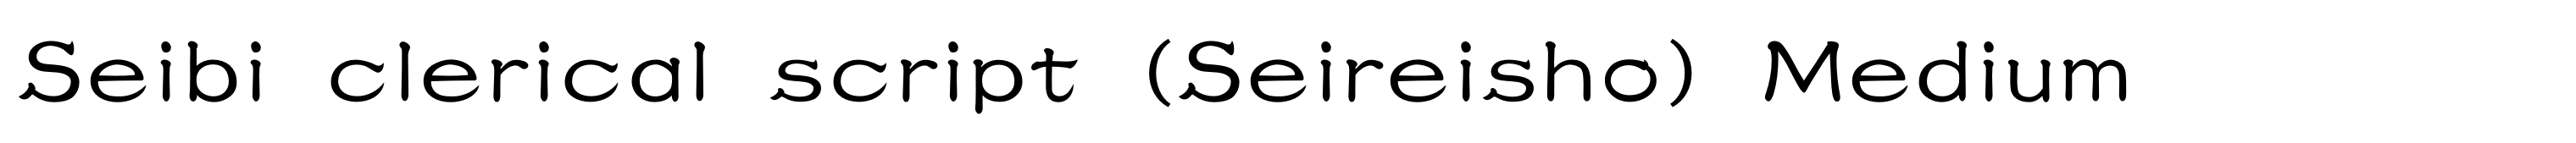 Seibi clerical script (Seireisho) Medium